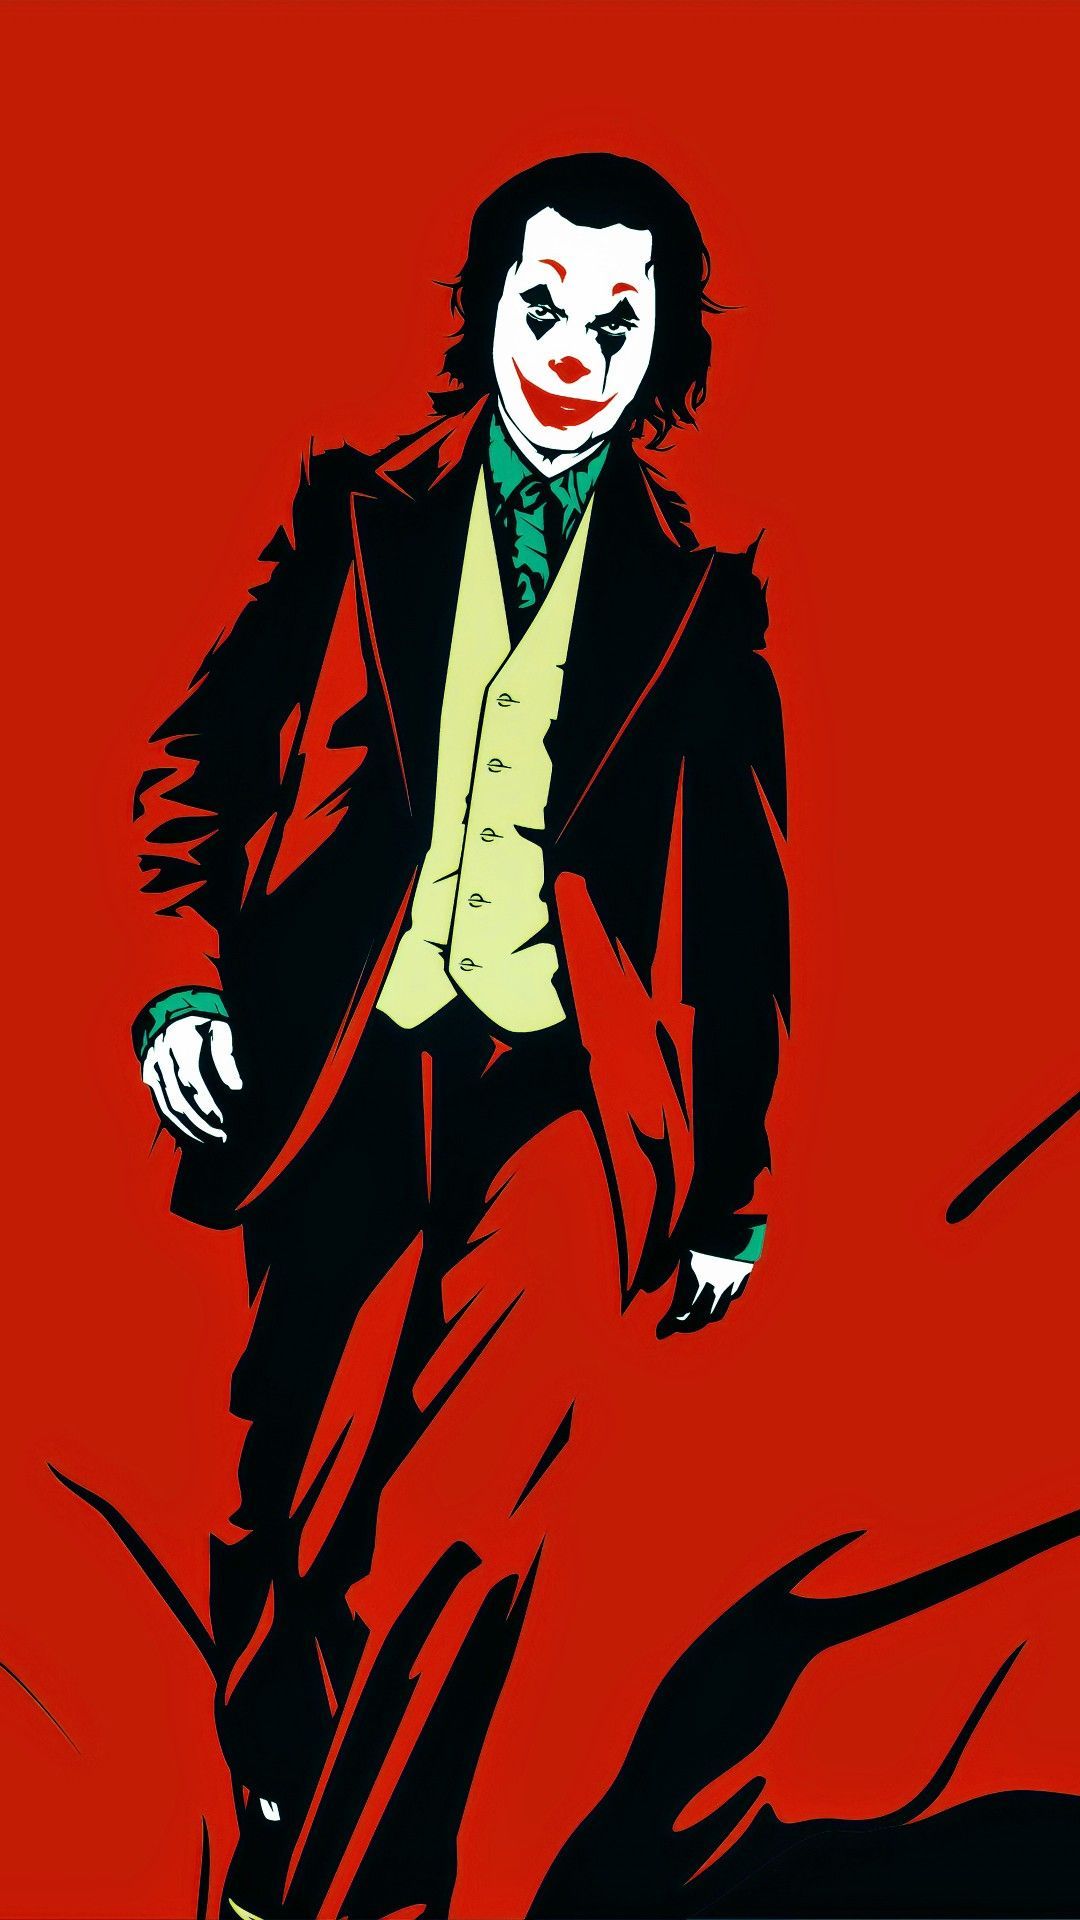 Joker, Joaquin Phoenix. Joker wallpaper, Joker